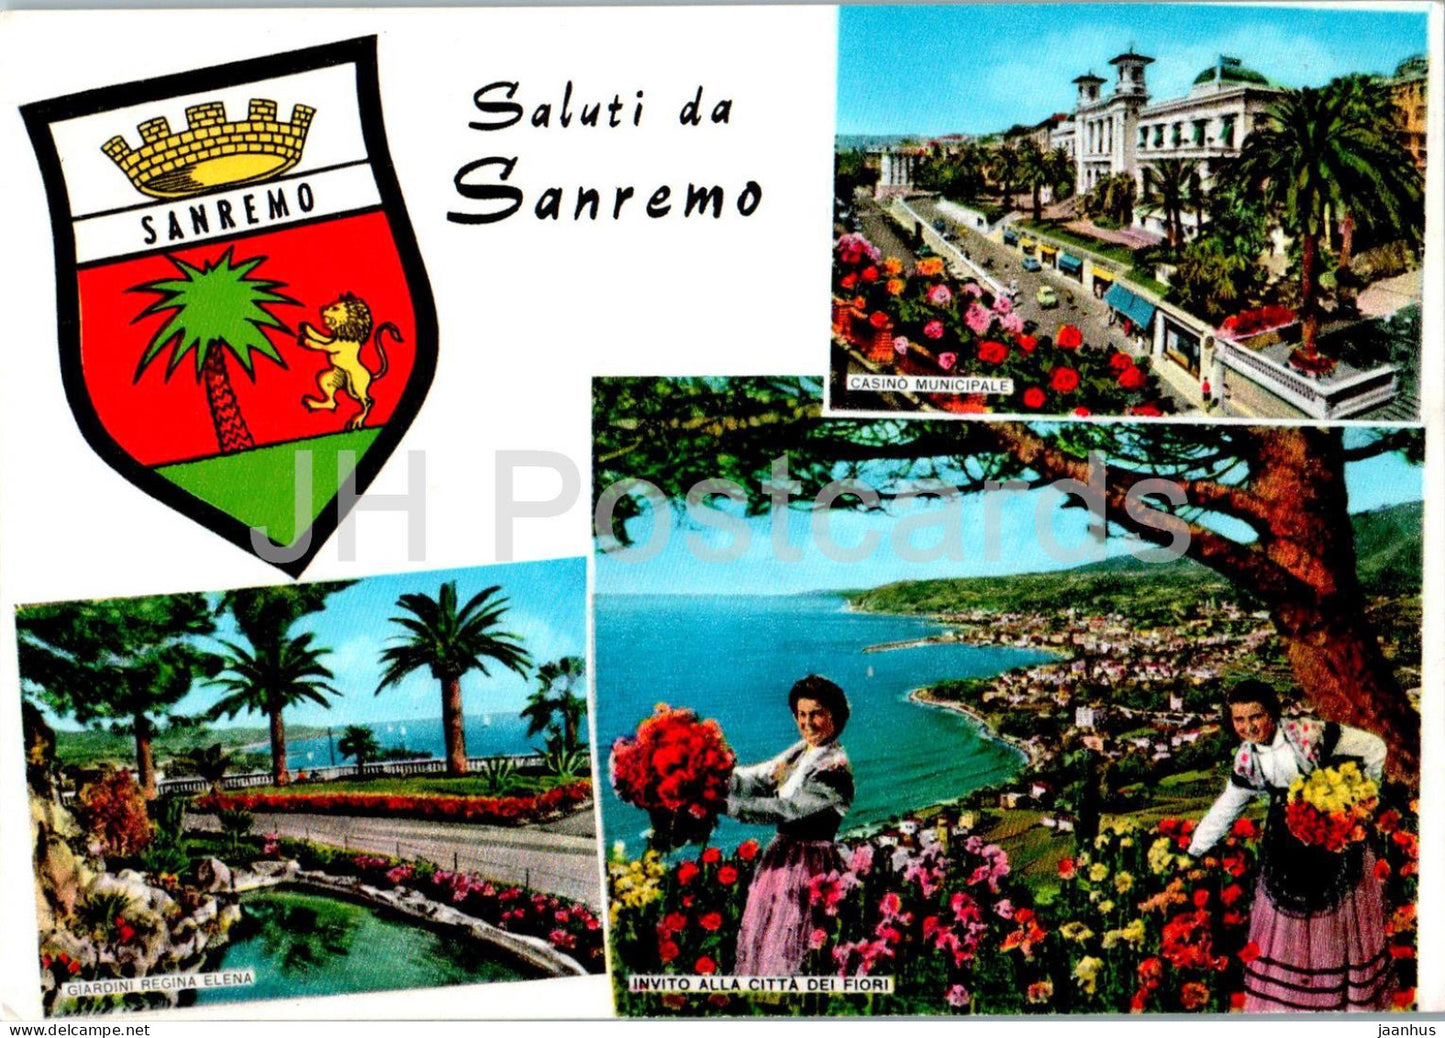 Saluti da San Remo - Salutations de S Remo - Greetings from San Remo - multiview - Italy - unused - JH Postcards